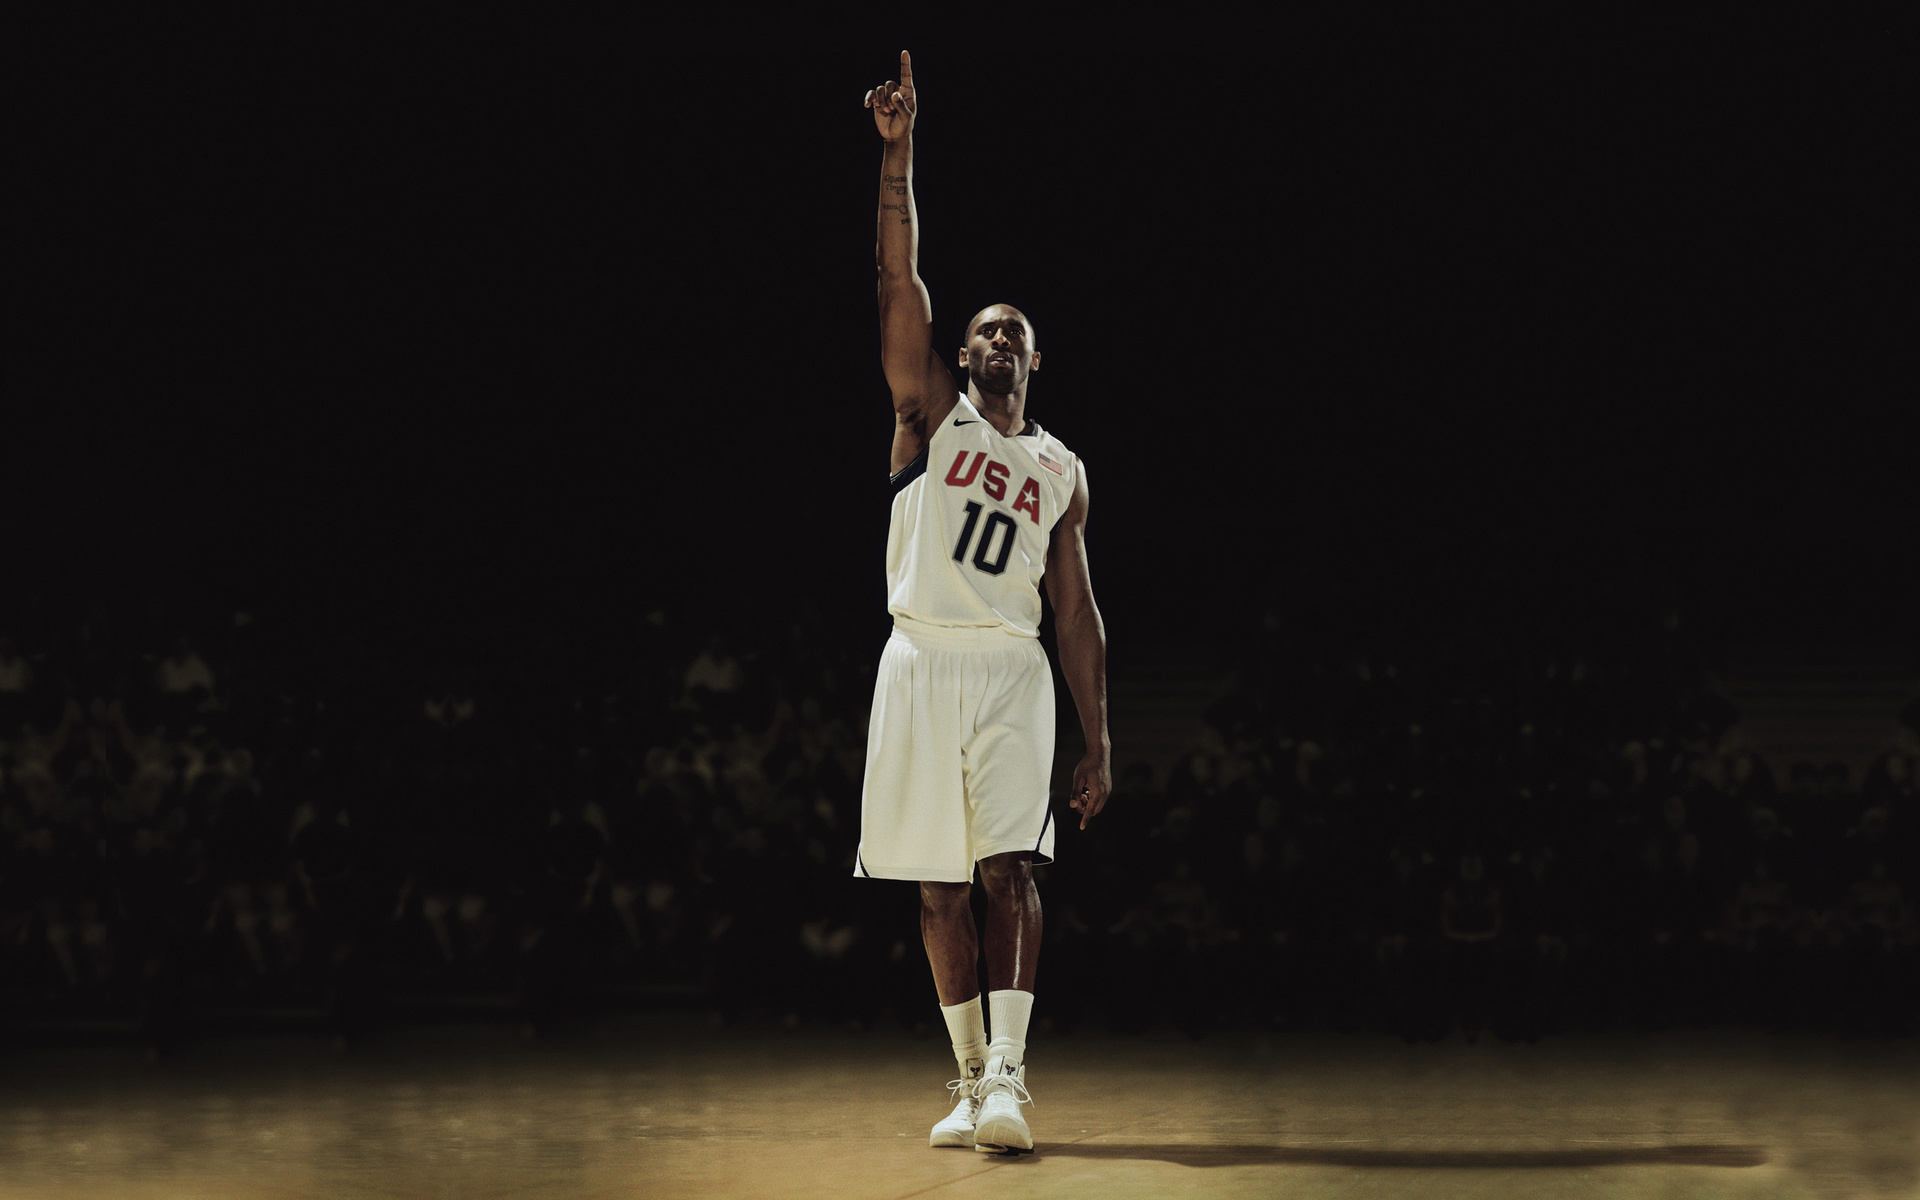 Kobe Bryant and LeBron James Wallpapers - Top Free Kobe Bryant and LeBron  James Backgrounds - WallpaperAccess